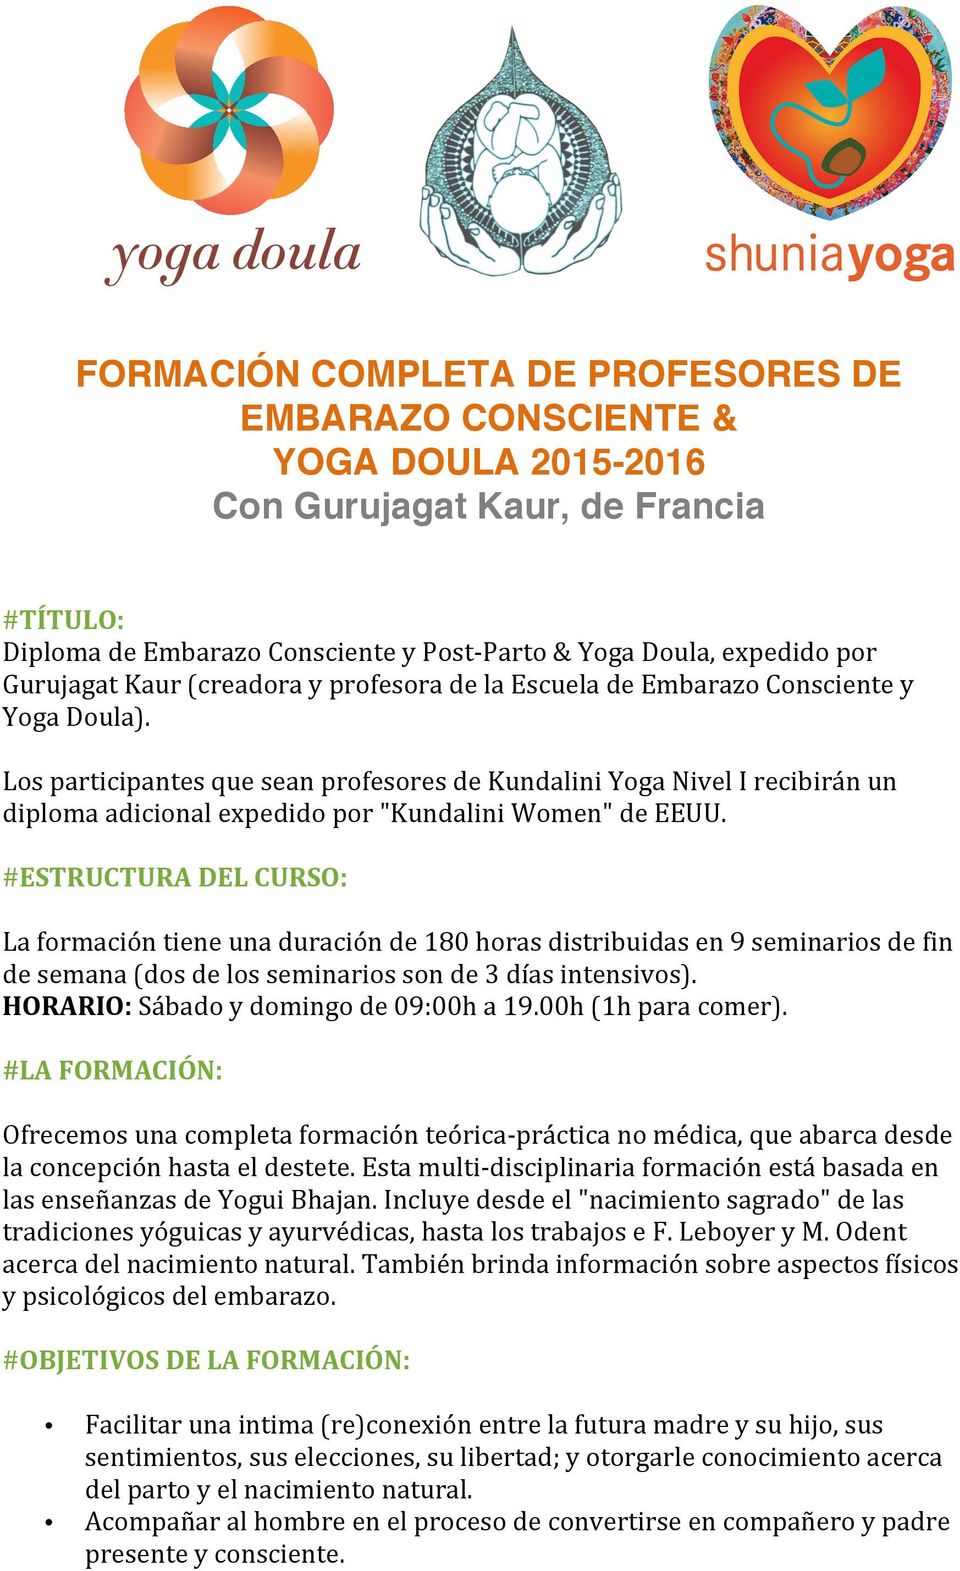 Los participantes que sean profesores de Kundalini Yoga Nivel I recibirán un diploma adicional expedido por "Kundalini Women" de EEUU.